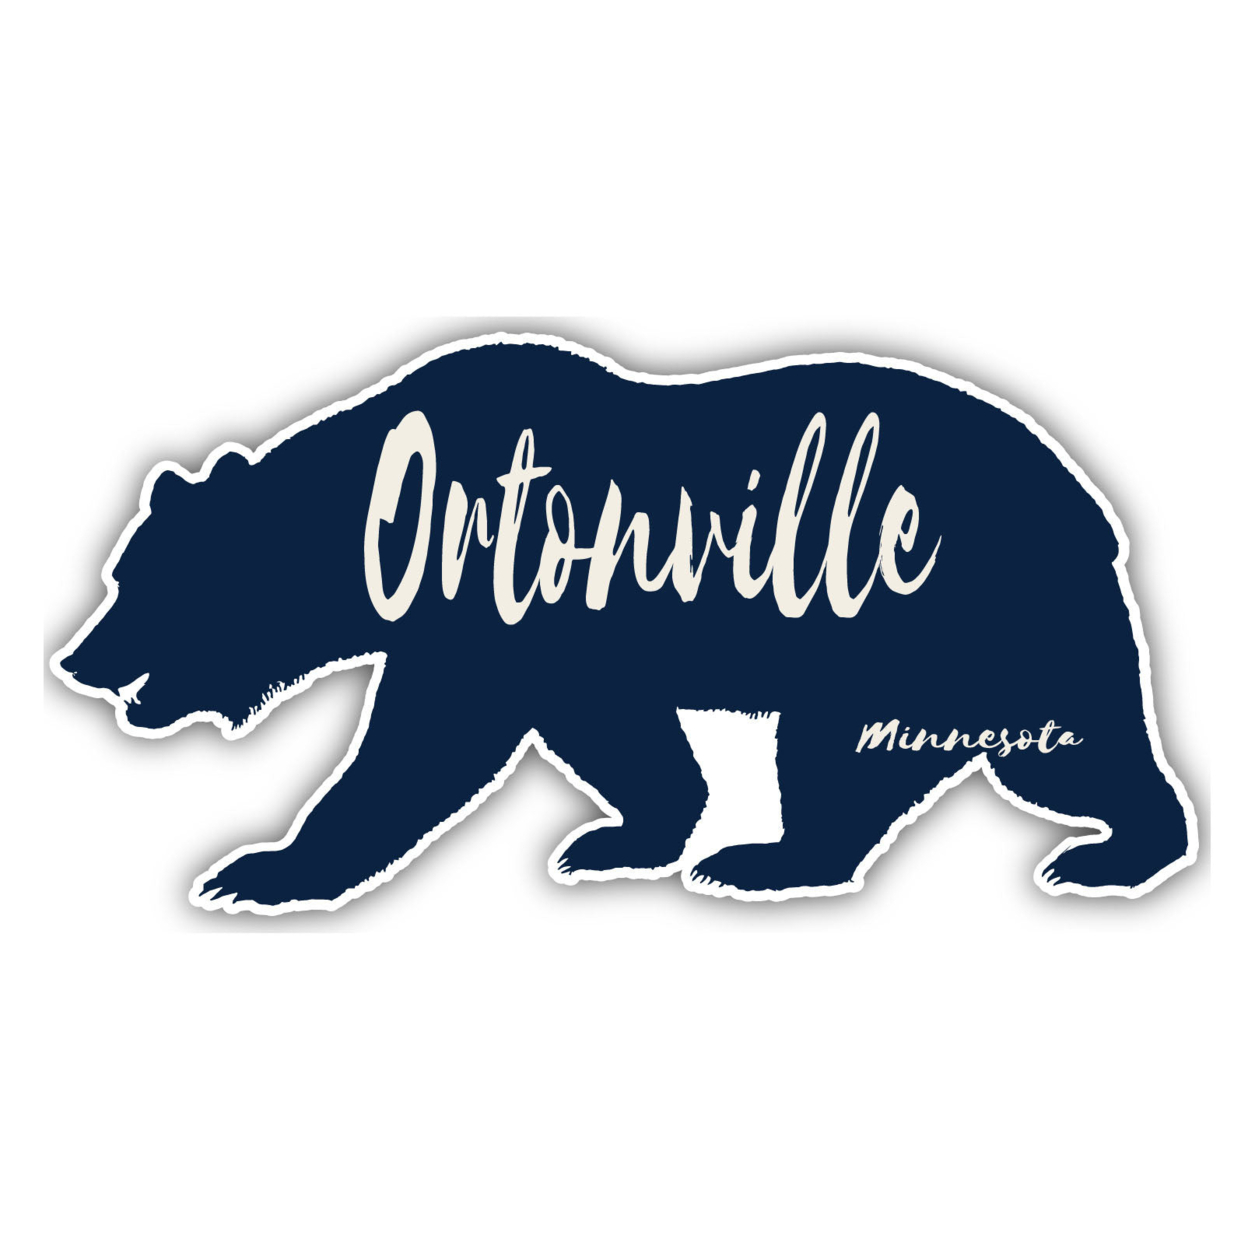 Ortonville Minnesota Souvenir Decorative Stickers (Choose Theme And Size) - Single Unit, 4-Inch, Bear